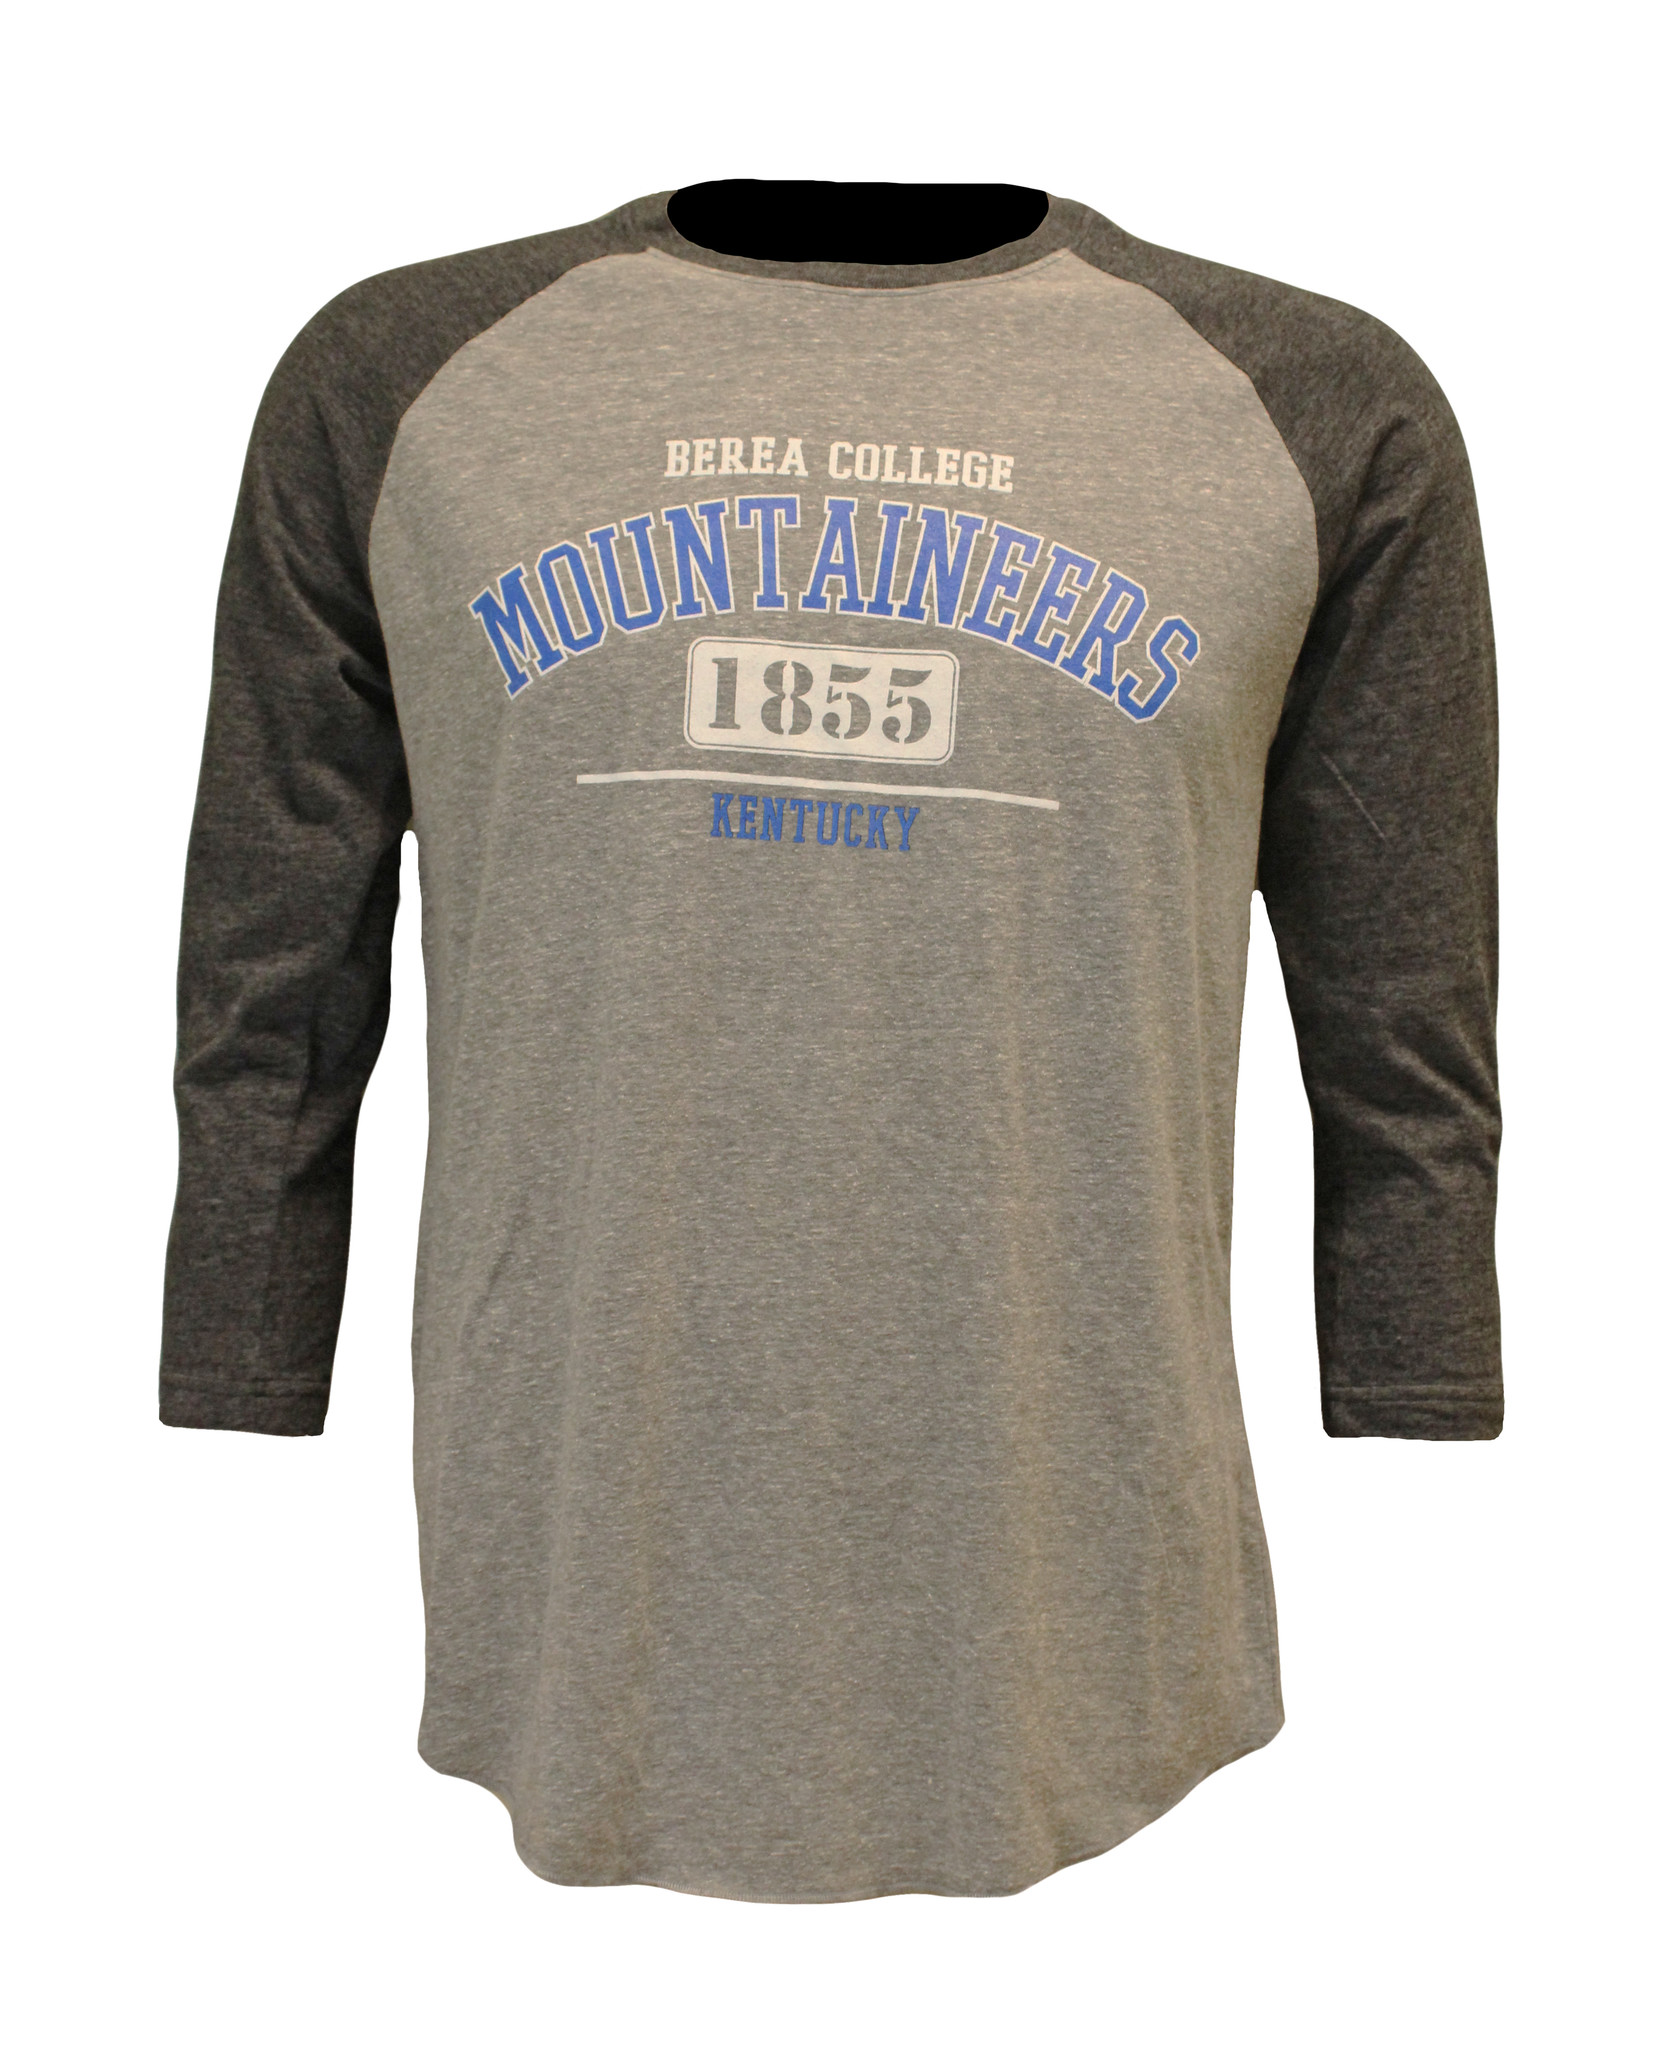 Berea College Mountaineers 3/4 Sleeve T-Shirt-1